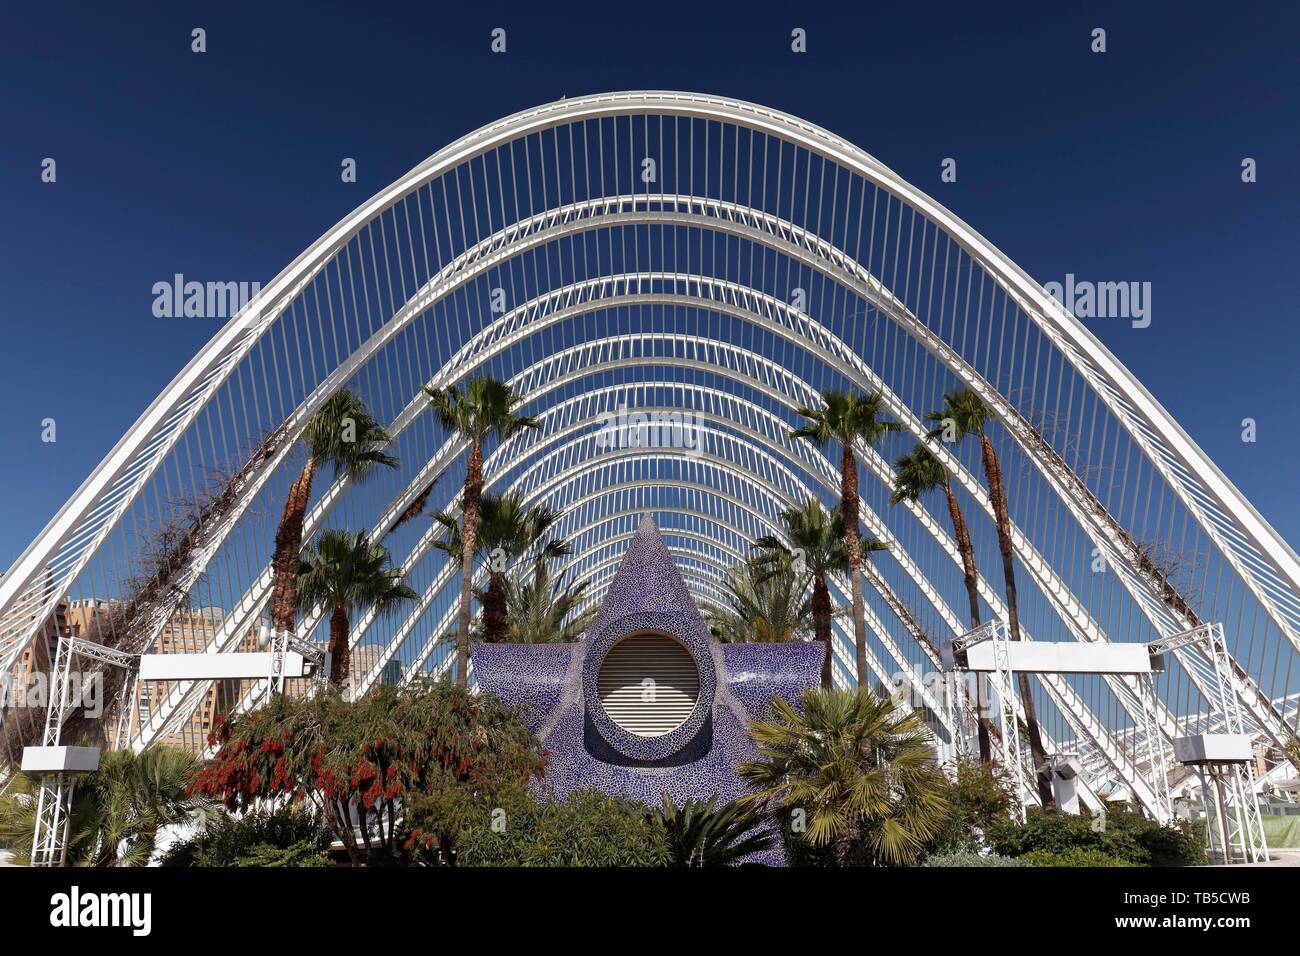 L'umbracle, couloir ombragé de palmiers, CAC, Ciutat des Arts i les Ciencies, architecte Santiago Calatrava, Valencia, Espagne Banque D'Images